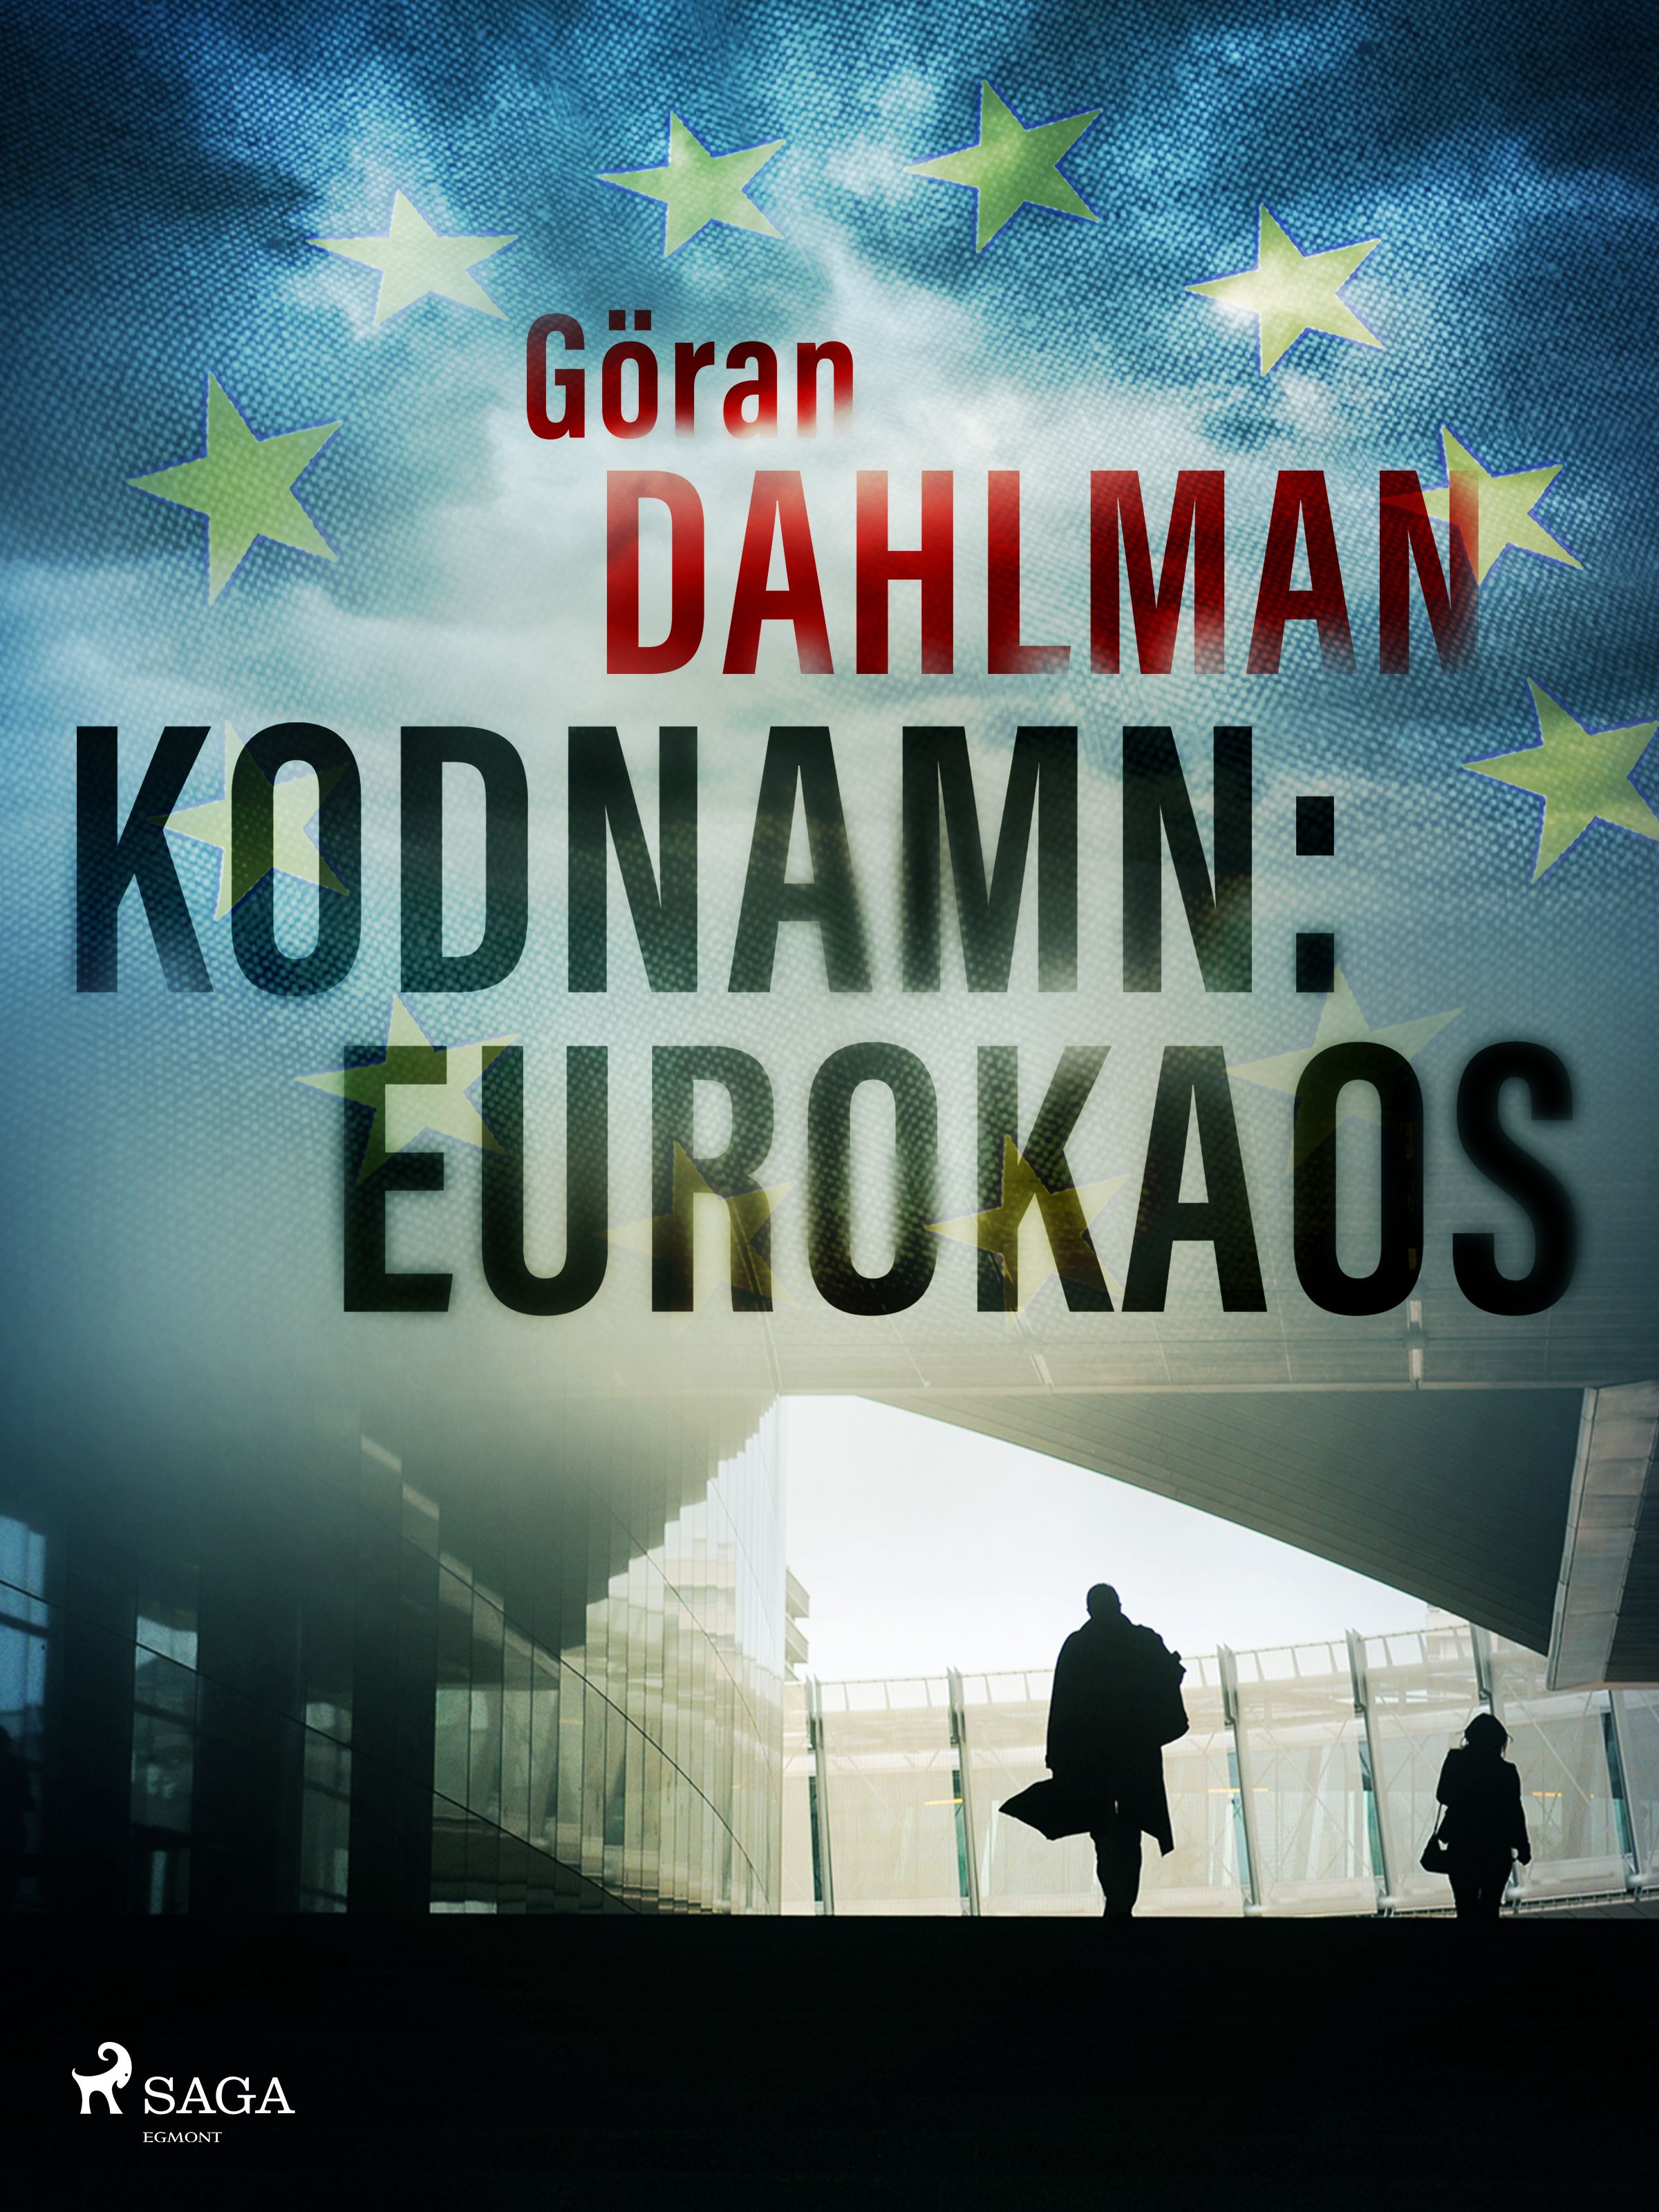 Kodnamn: Eurokaos, e-bog af Göran Dahlman